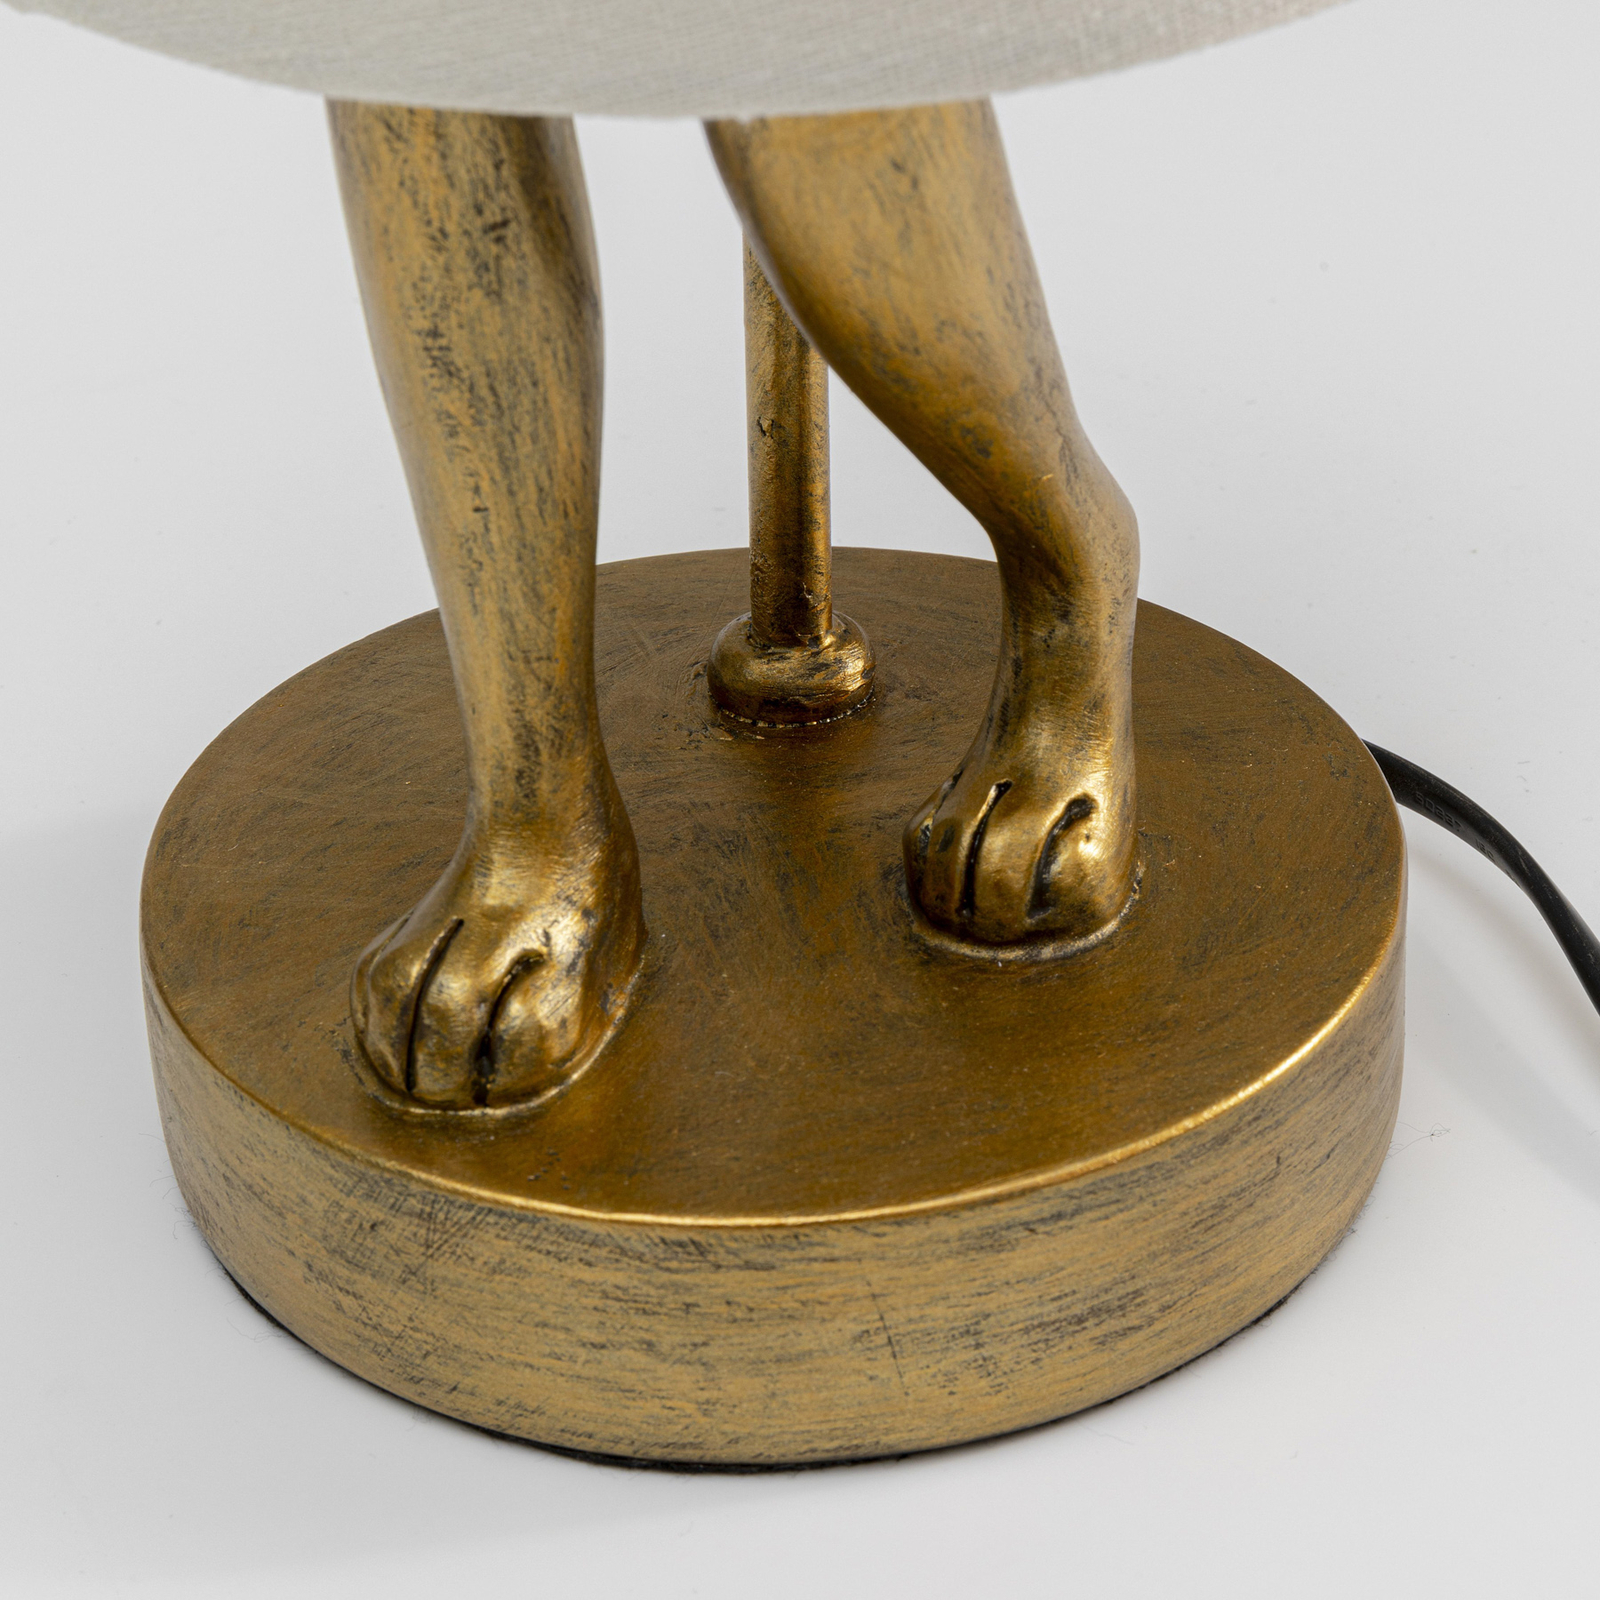 Kare Lámpara de mesa Animal Rabbit, dorada/blanca, altura 50 cm